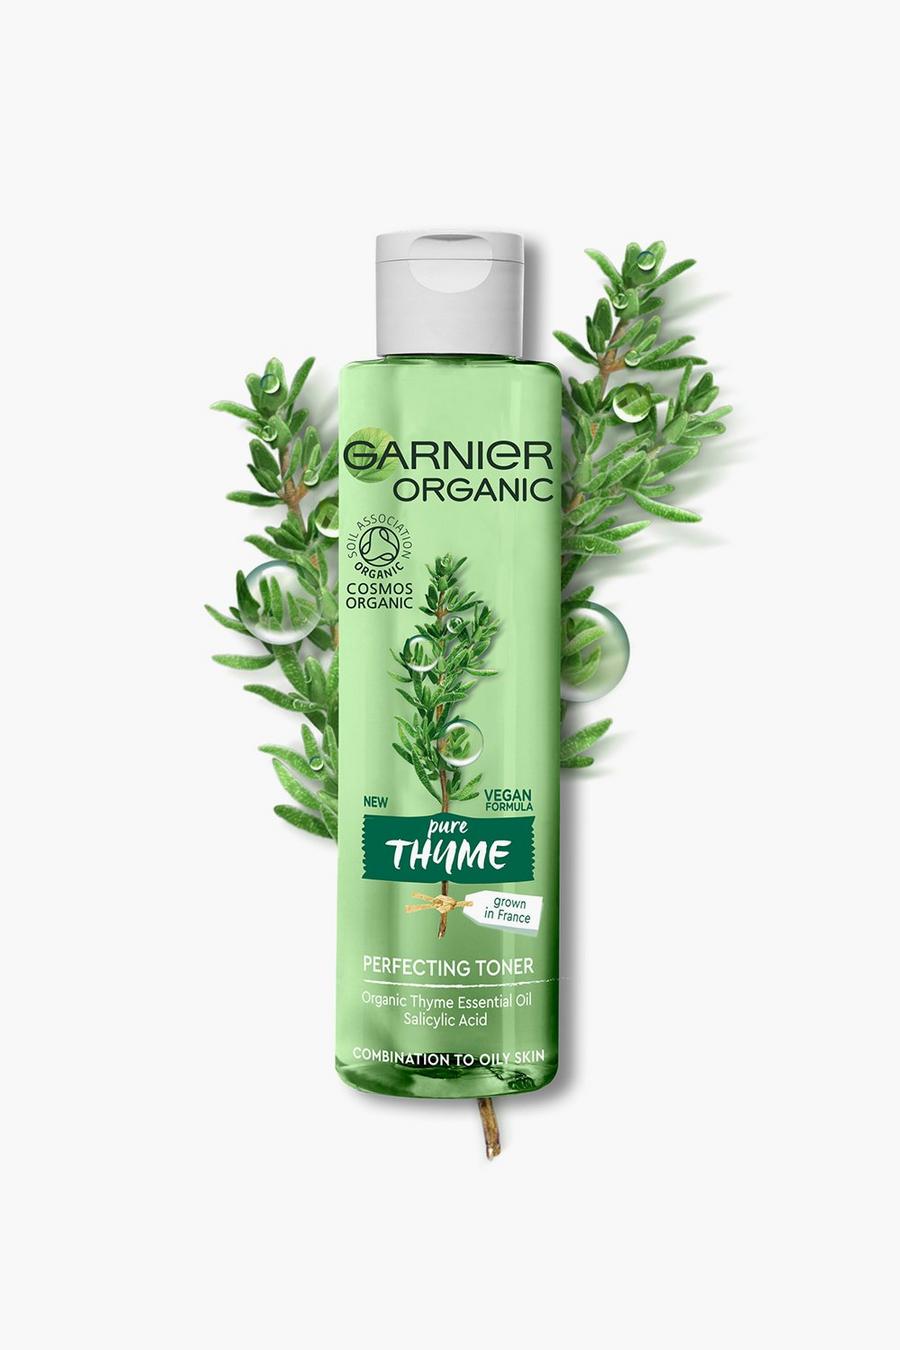 Green Garnier Organic Thyme Perfecting Toner 150ml